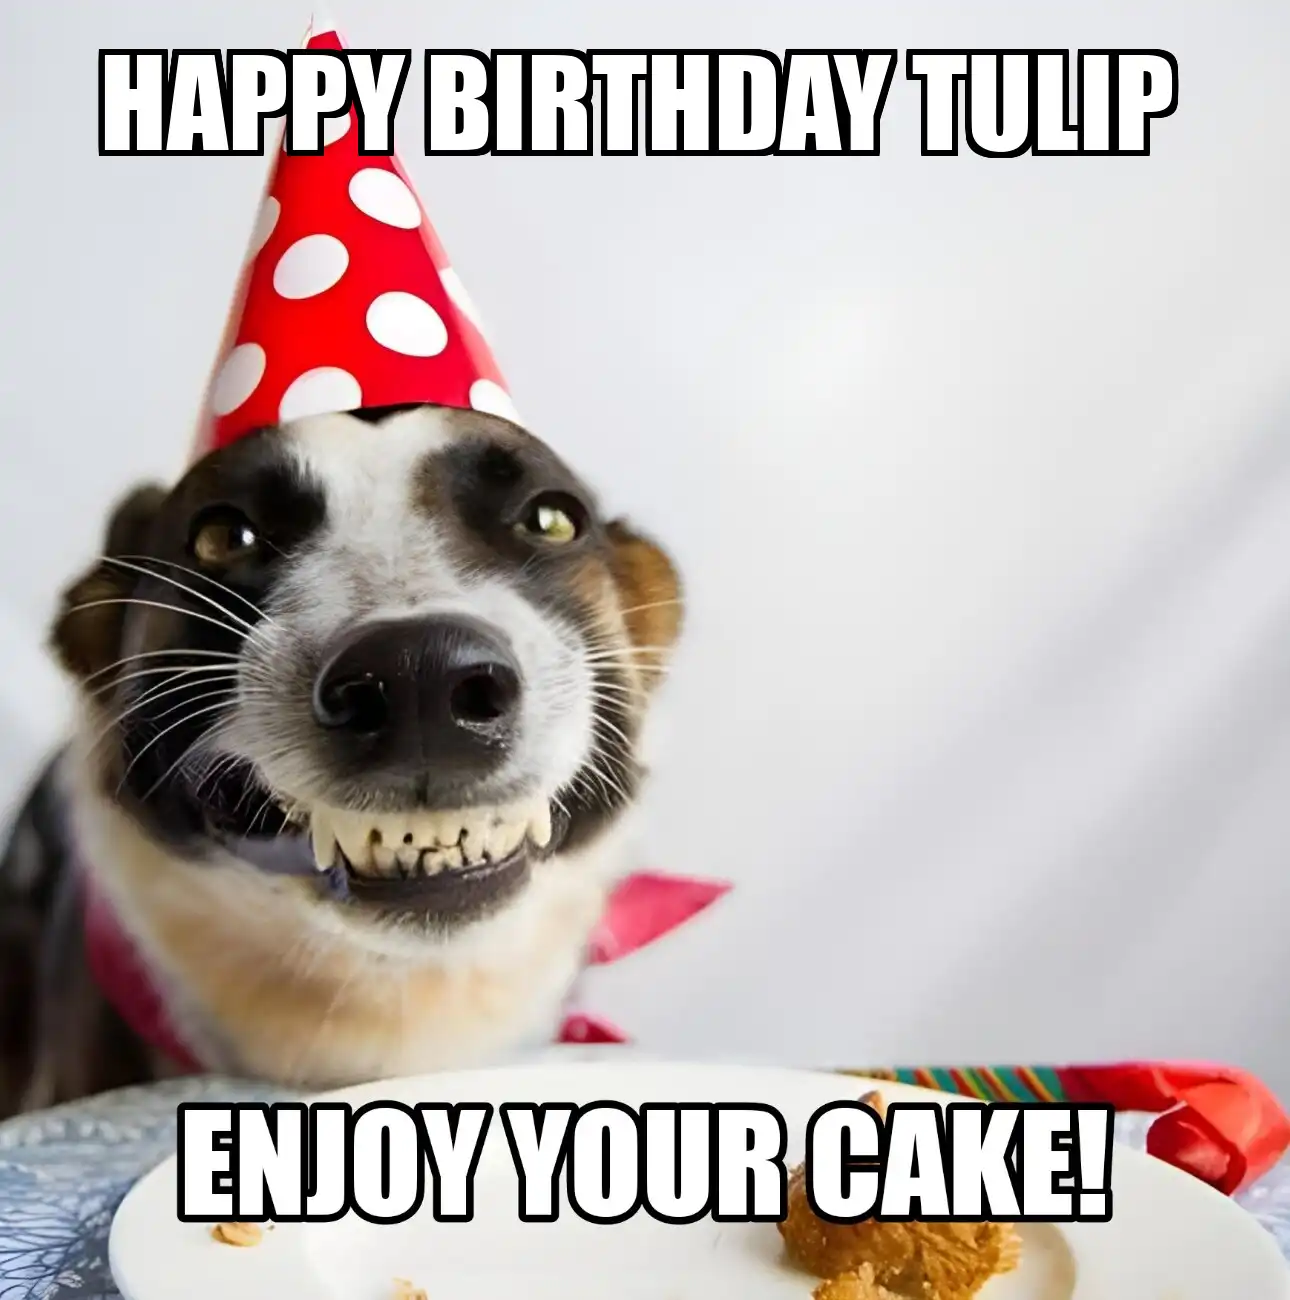 Happy Birthday Tulip Enjoy Your Cake Dog Meme